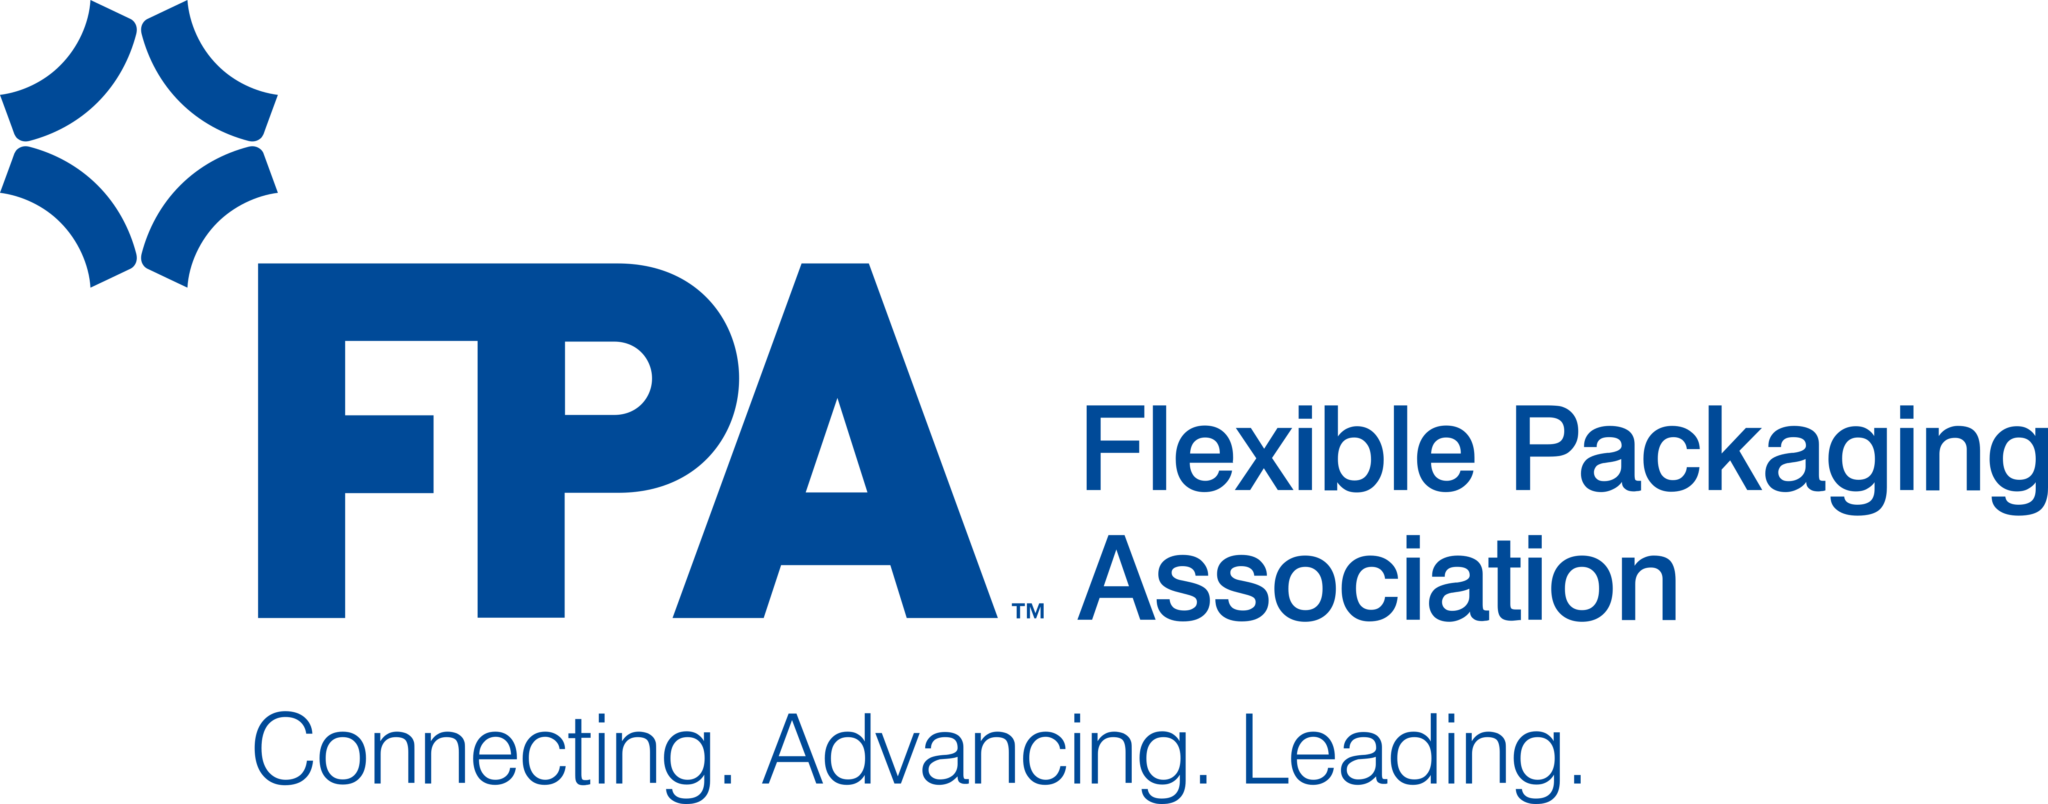 Flexible Packaging Association Logos Download